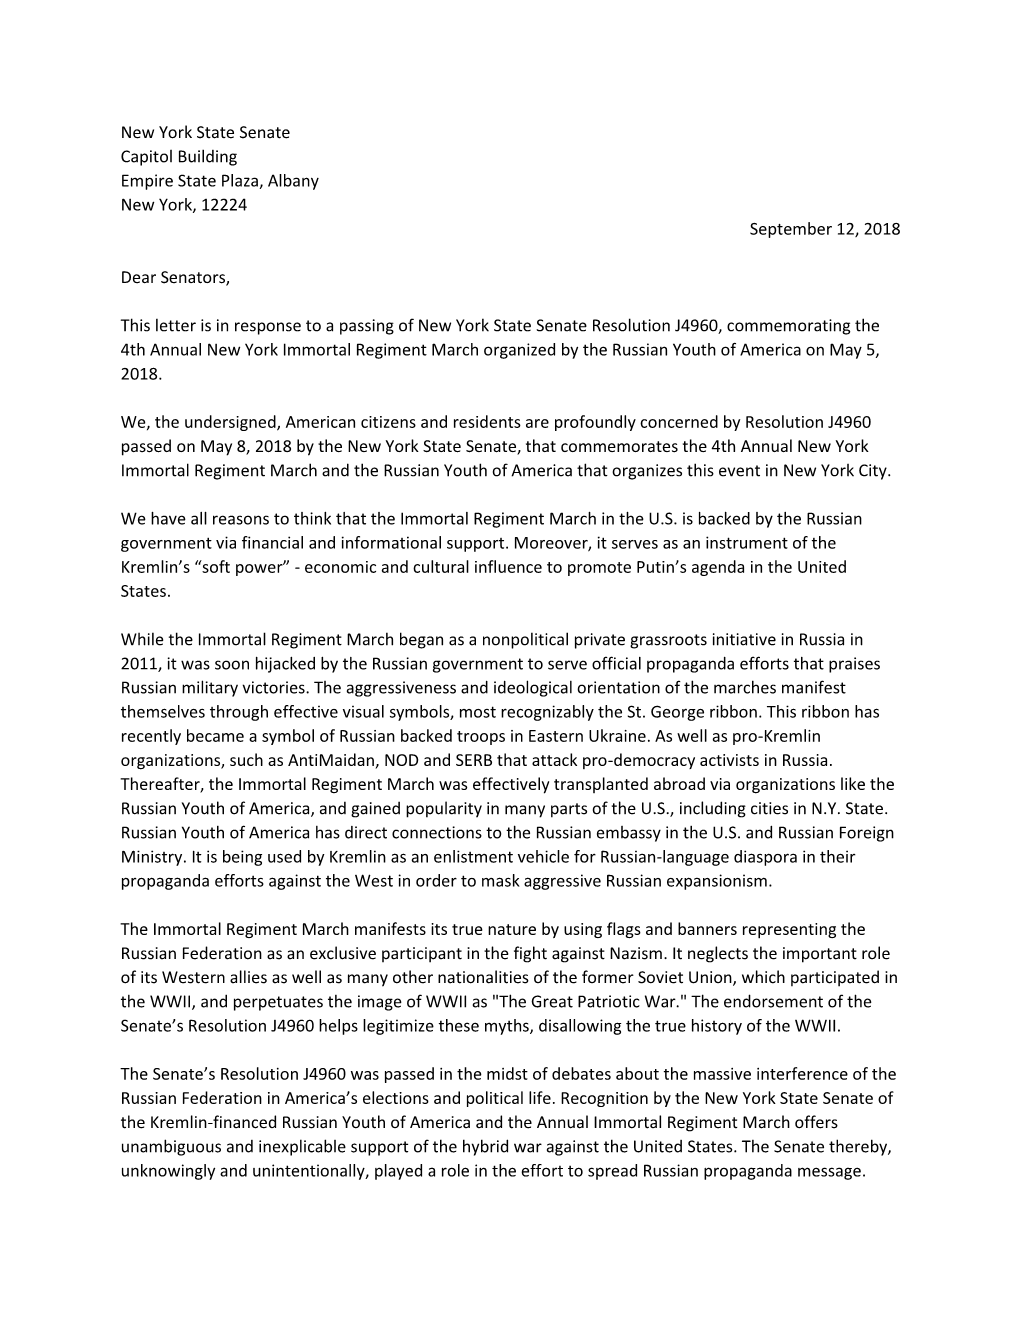 Open Letter to New York State Senators